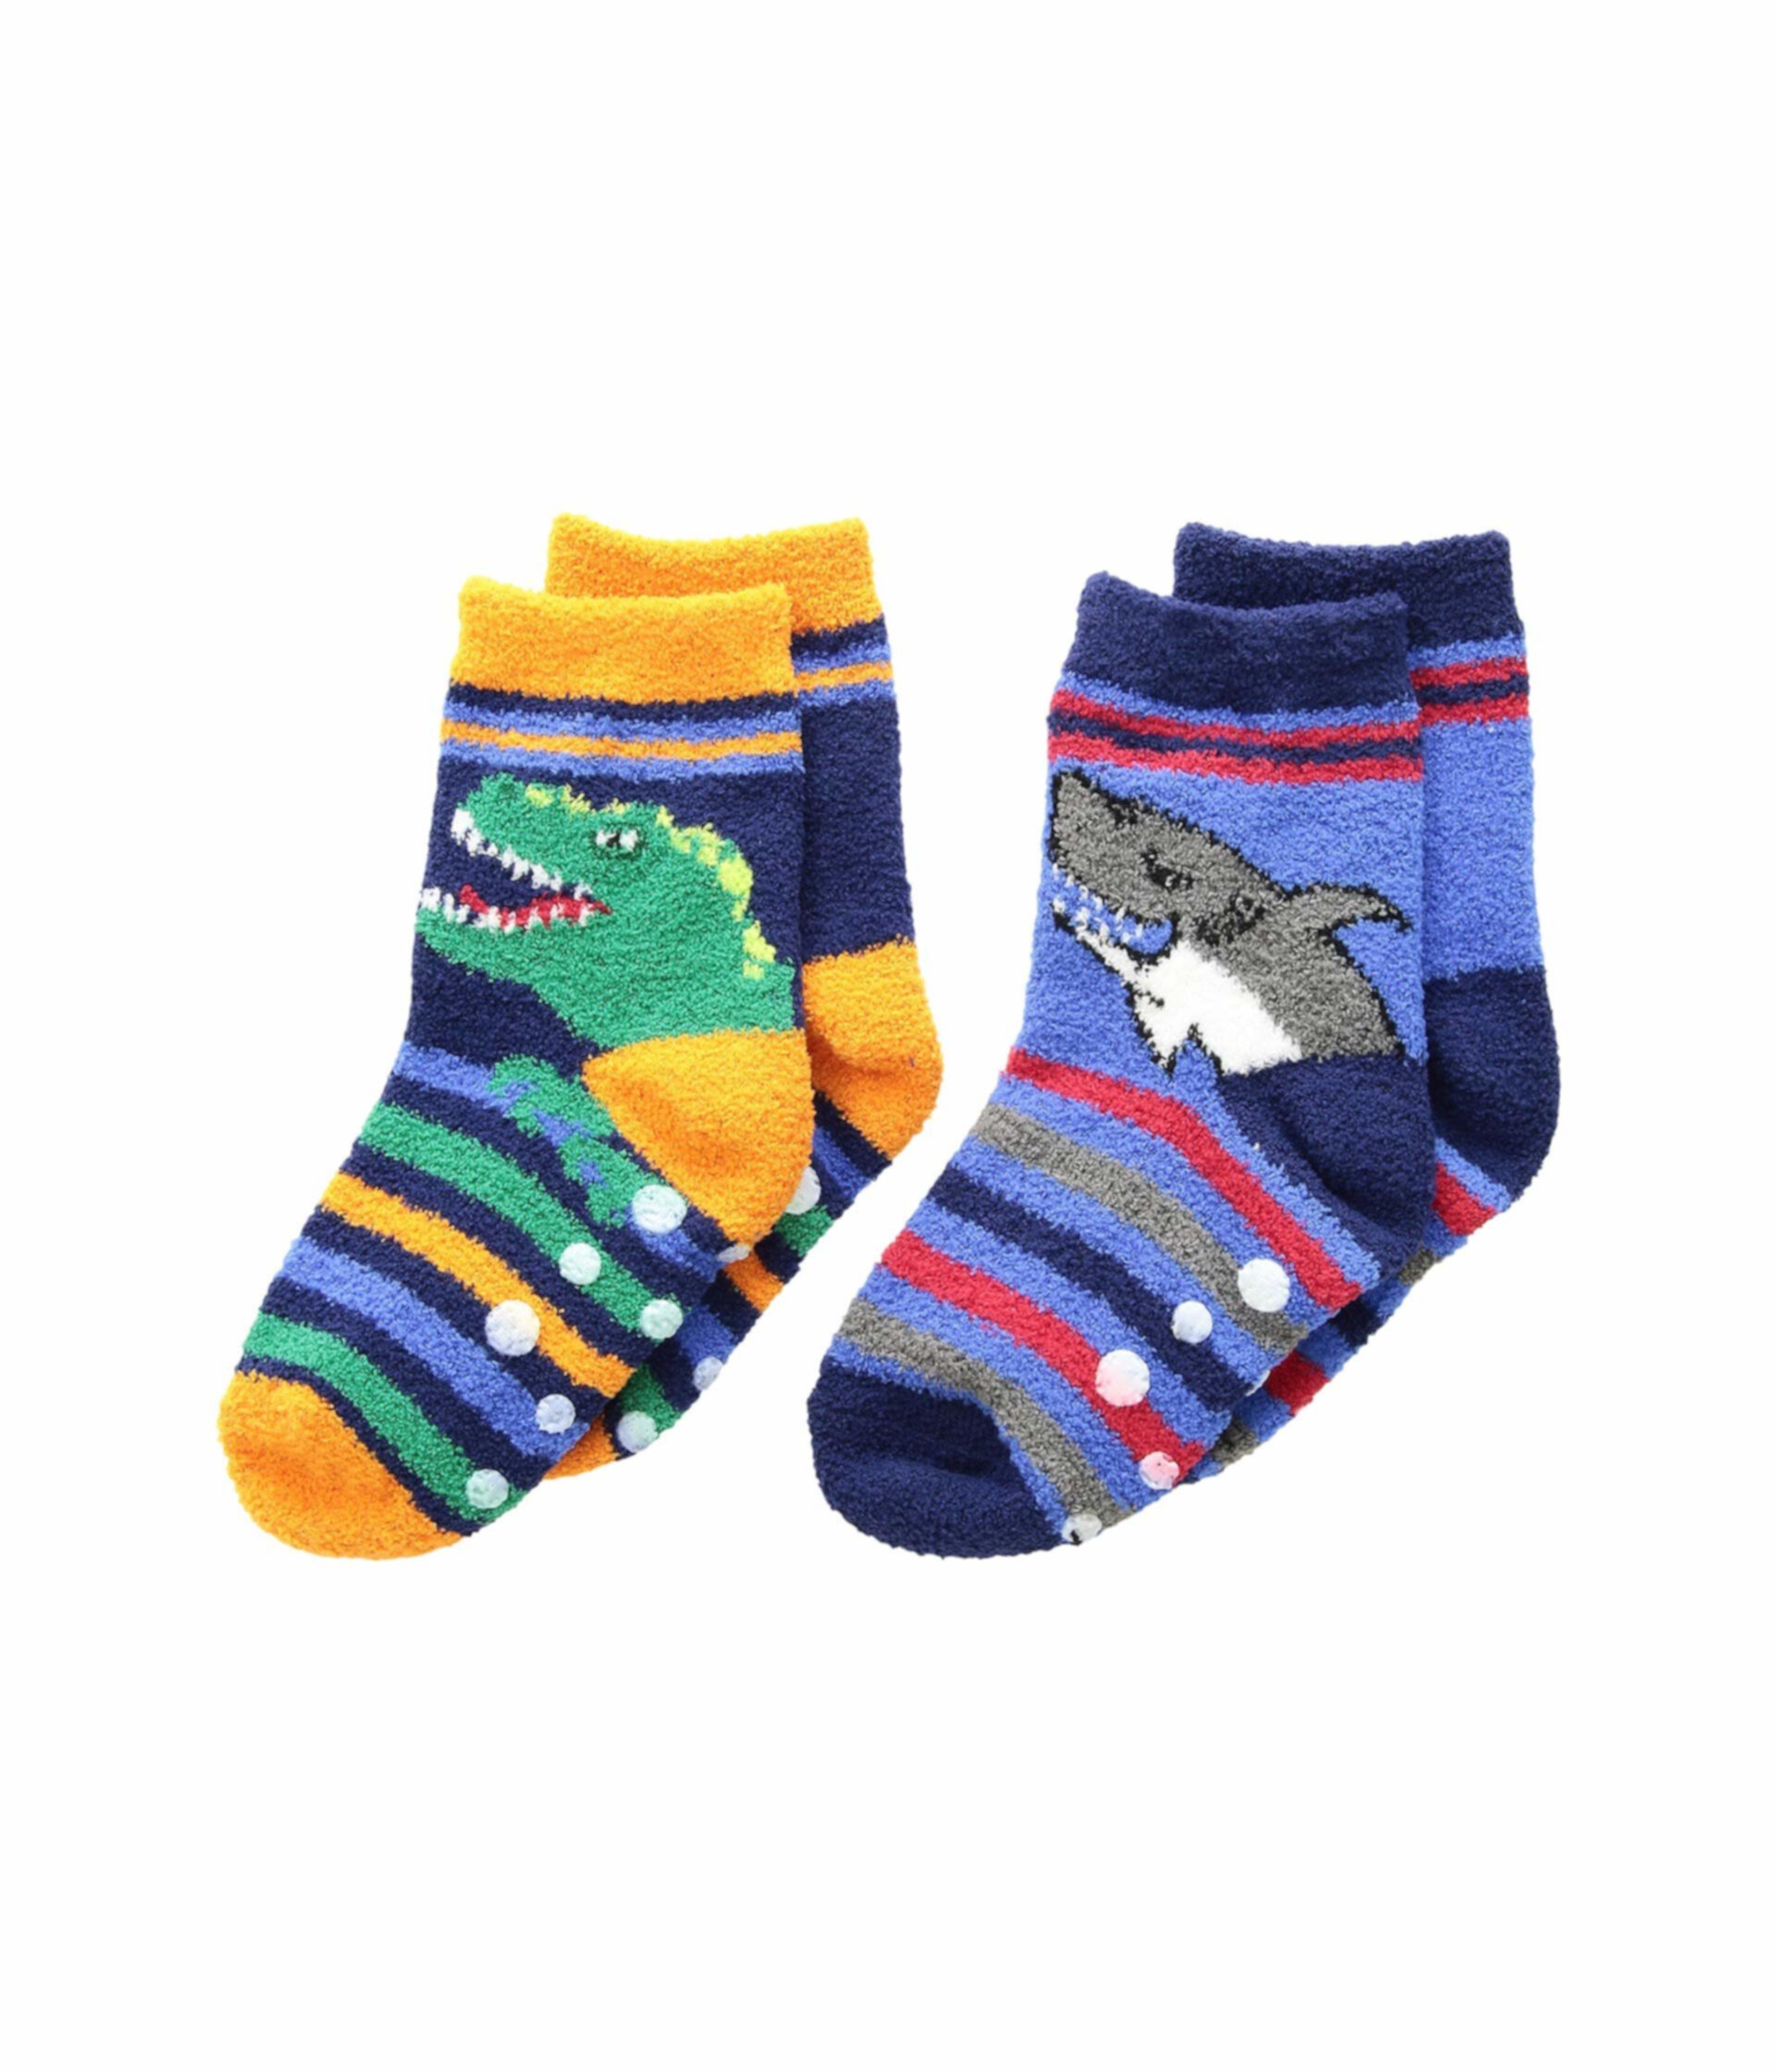 Противоскользящие носки Dino and Shark, 2 шт. (Младенец / малыш / маленький ребенок) Jefferies Socks